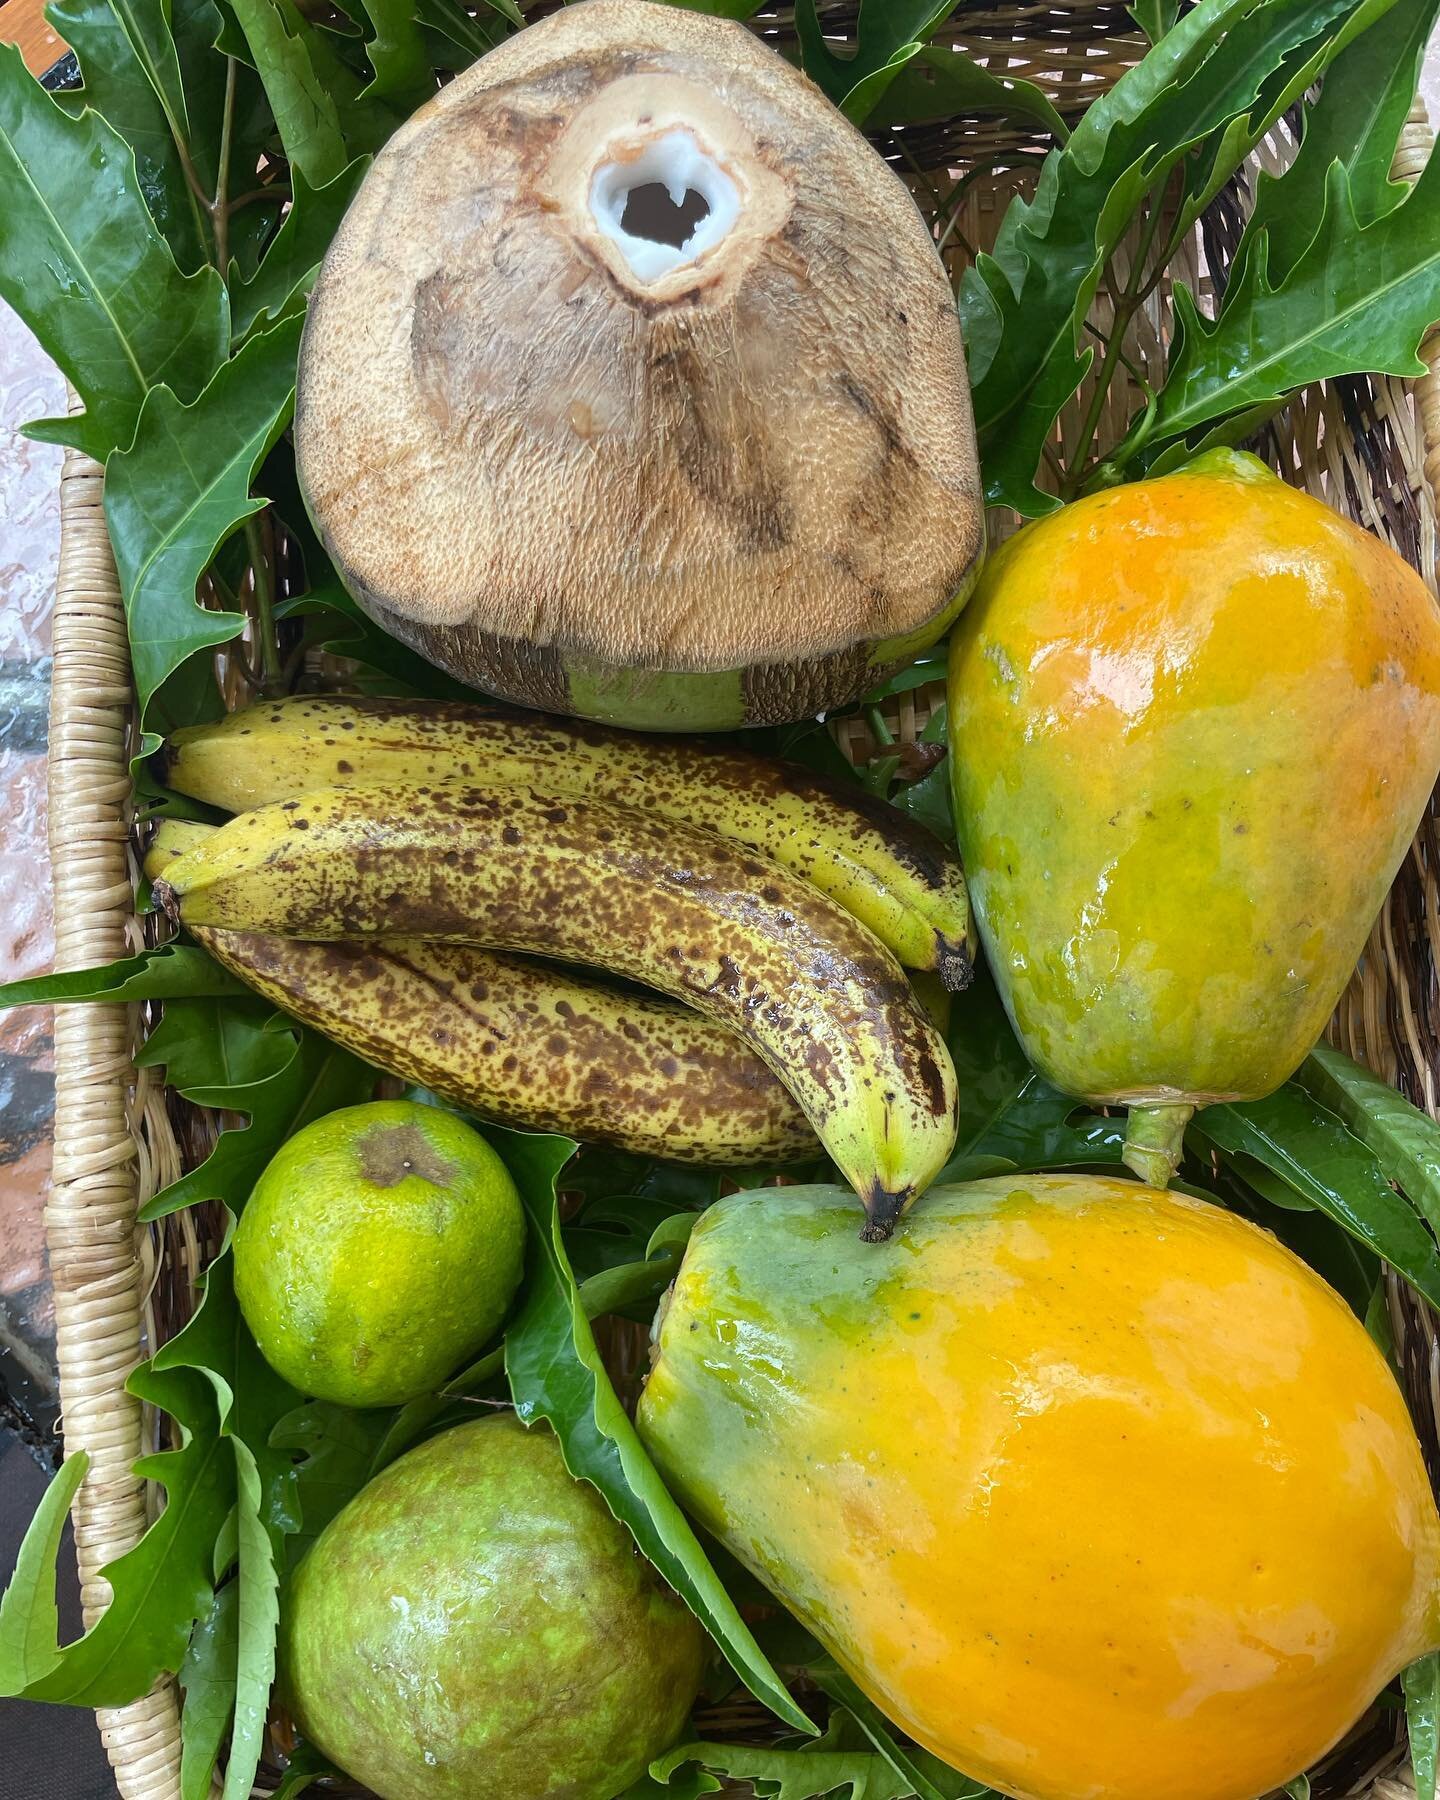 Backyard Harvest. 

#fiji #savusavu #southpacific #beachhouse #nativeland #backyardharvest #greencoconut #guava #lemon #lime #papaya #banana